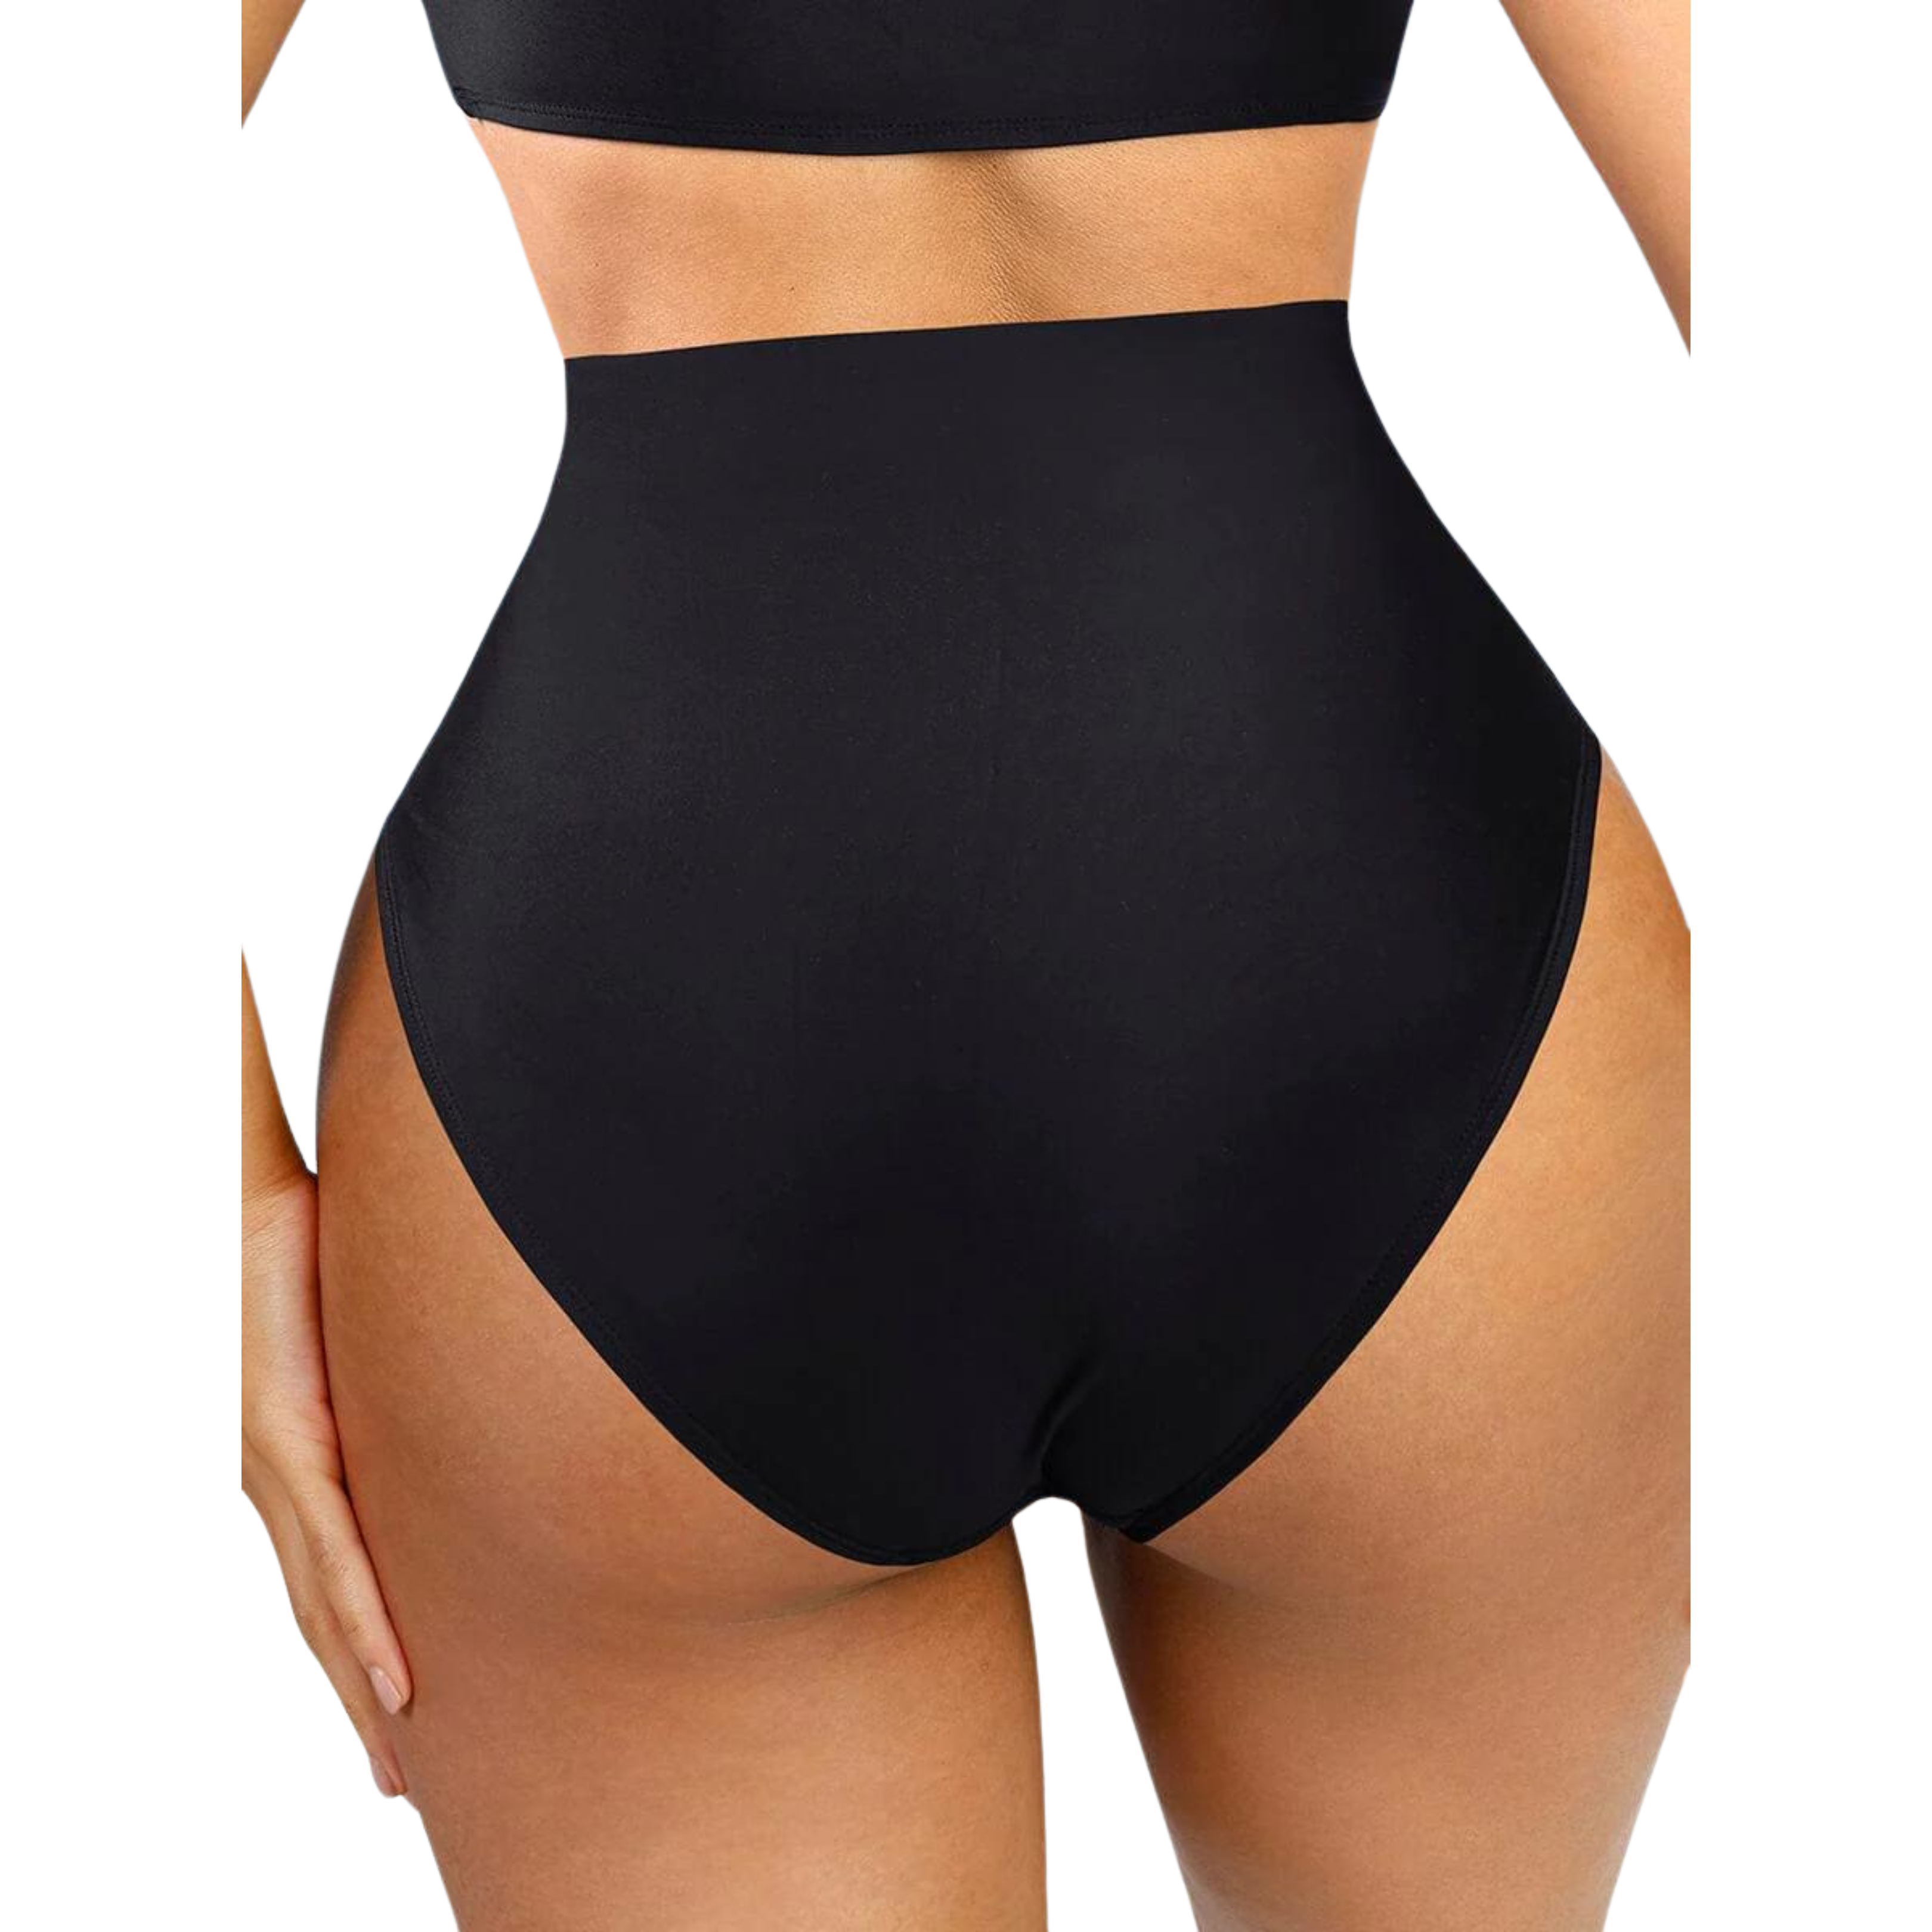 Two Piece Compression Bottom Swim Suit